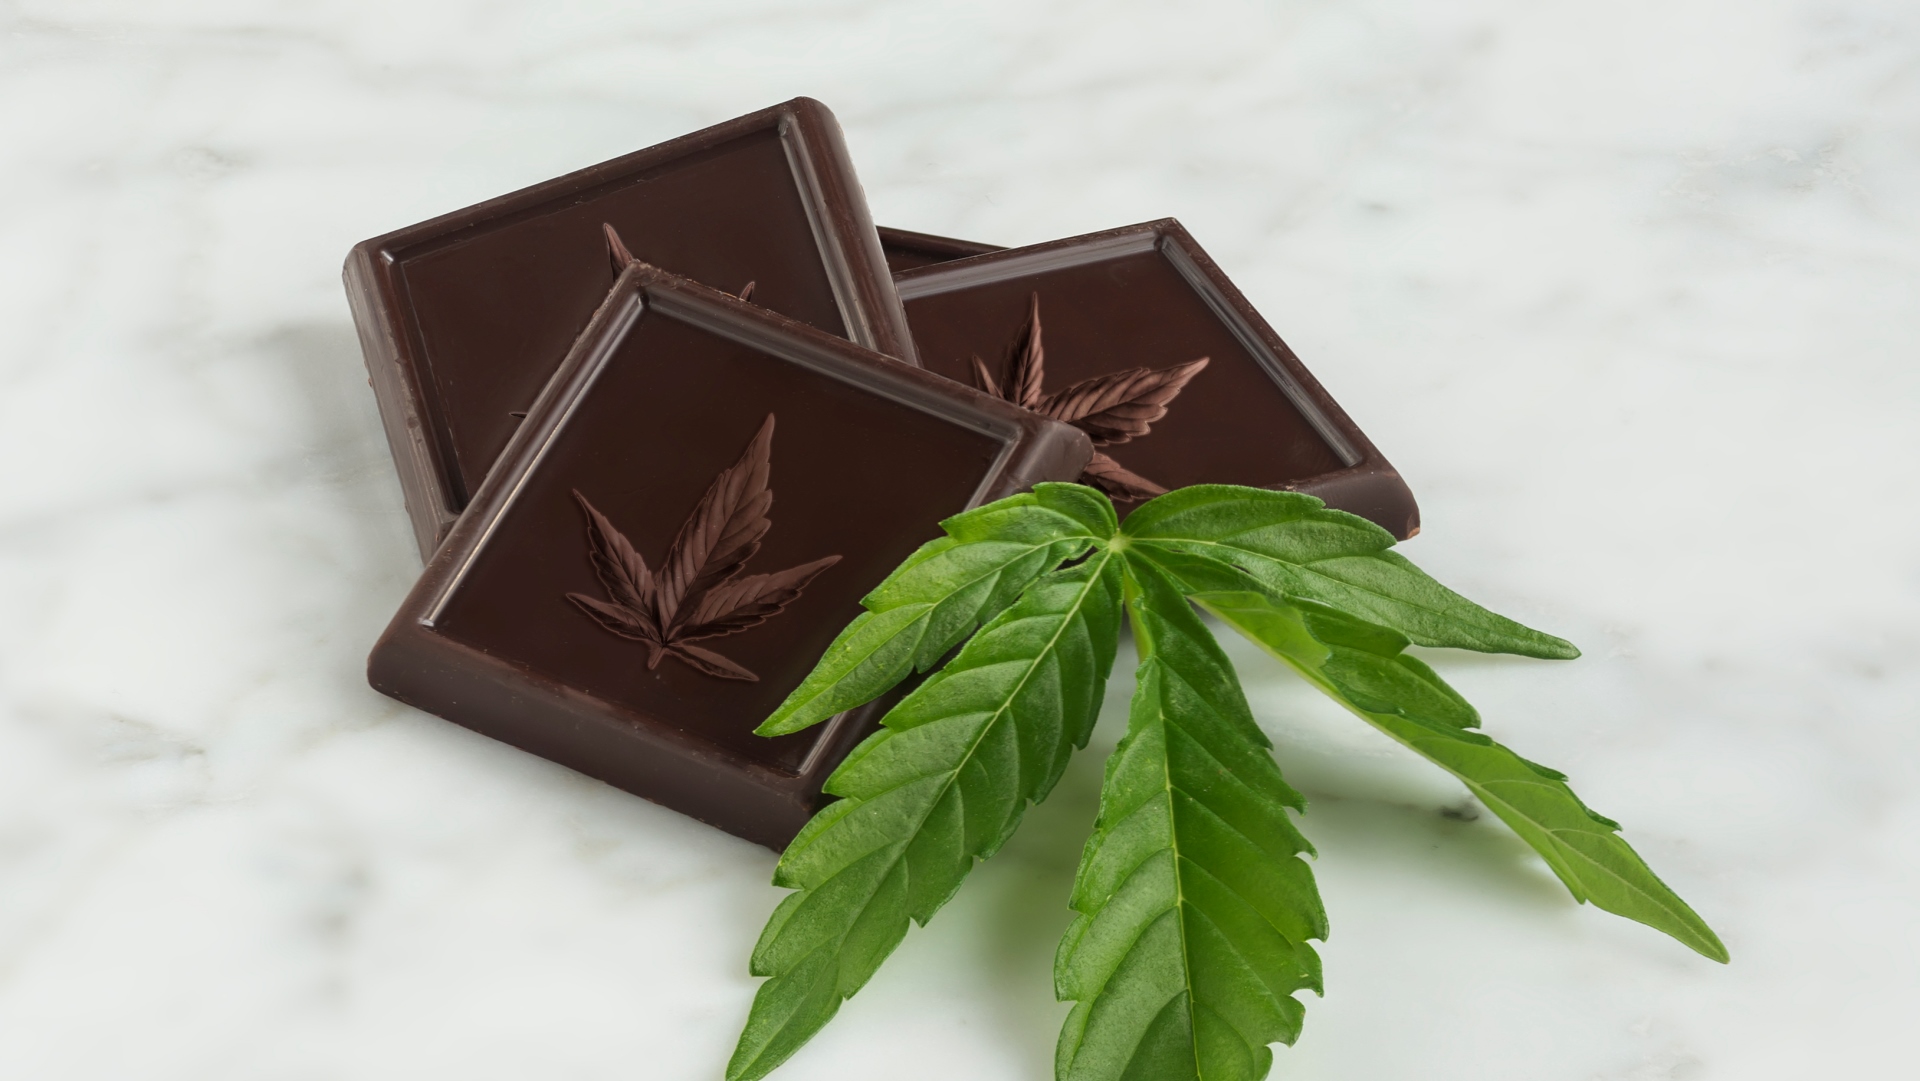 iStock photo of edible cannabis chocolate bar with cannabis leaf